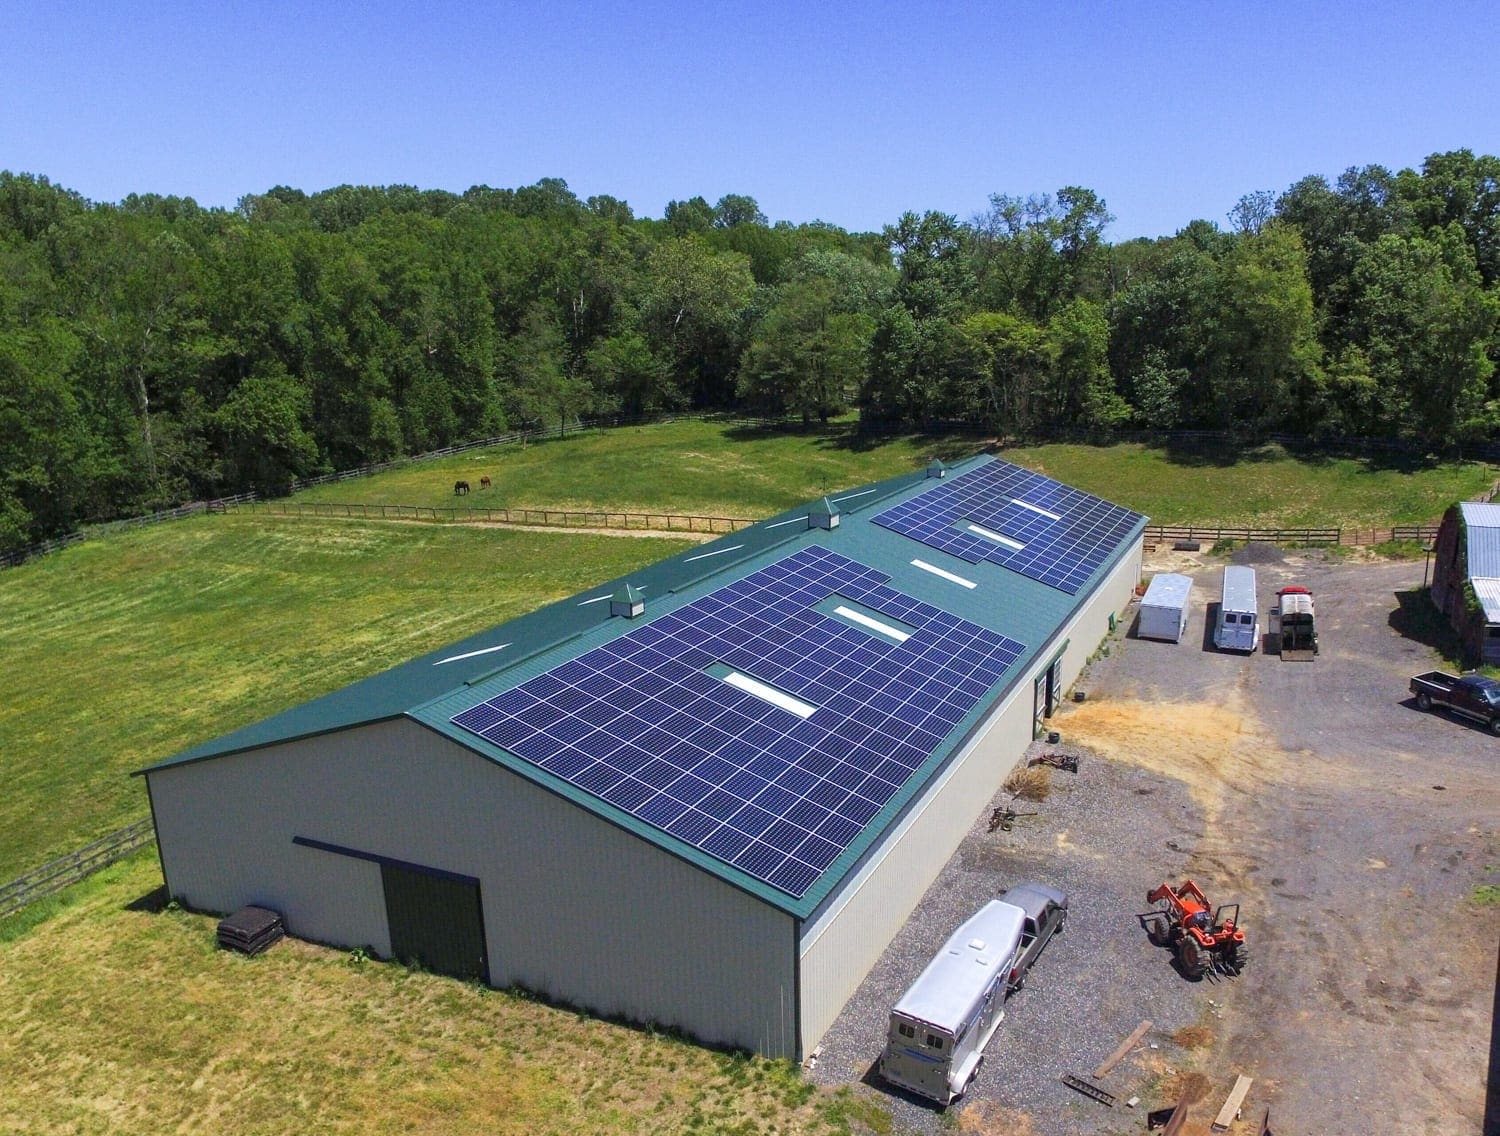 Dodon Farm solar panels barn